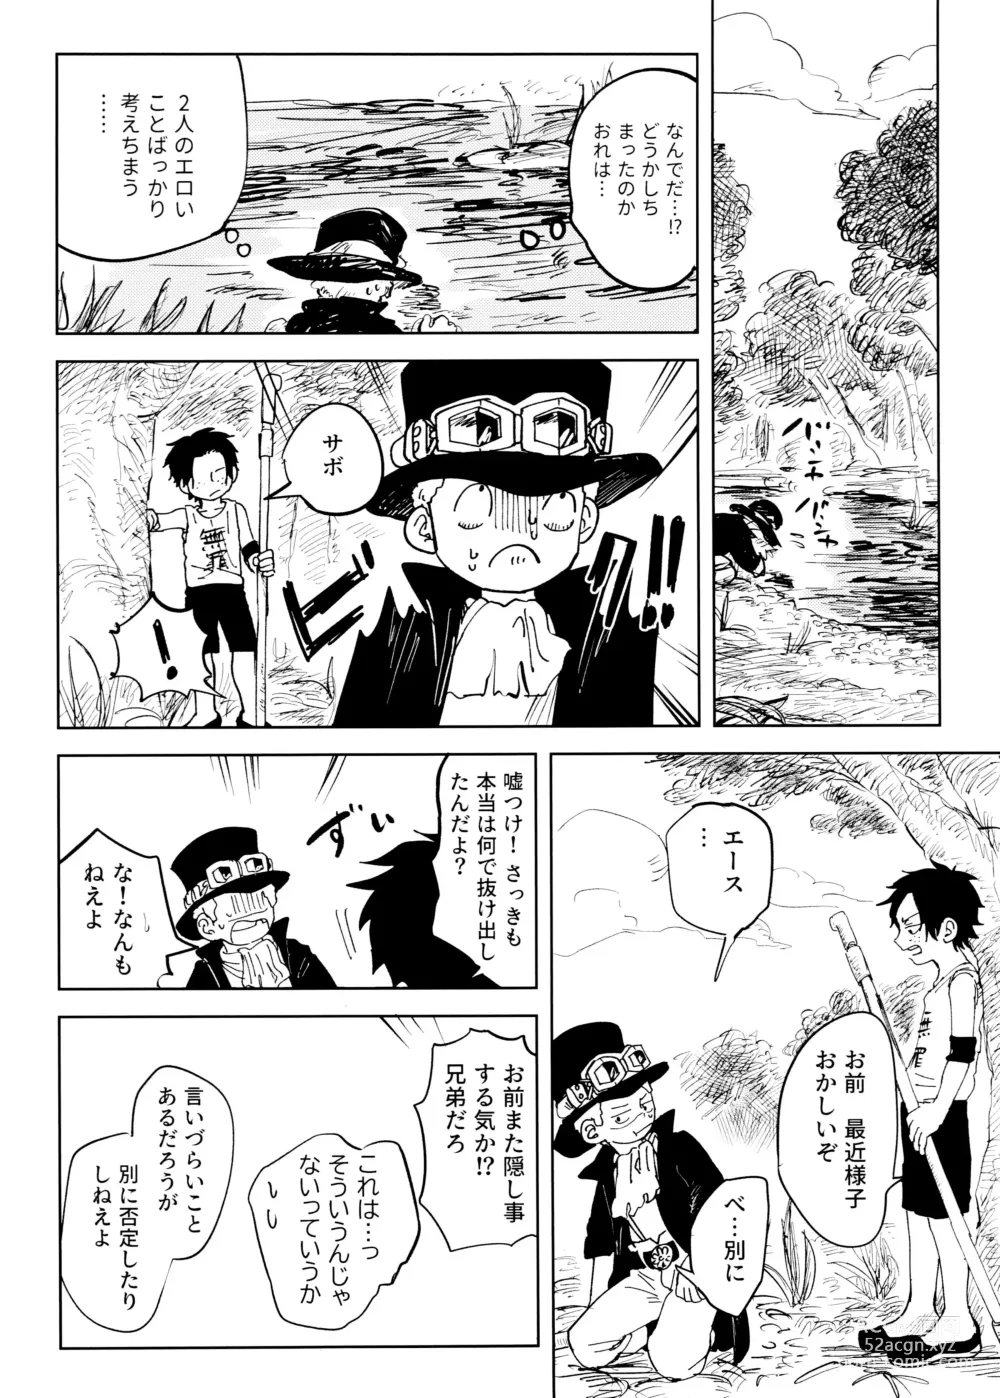 Page 25 of doujinshi Himitsu no Colubo Yama